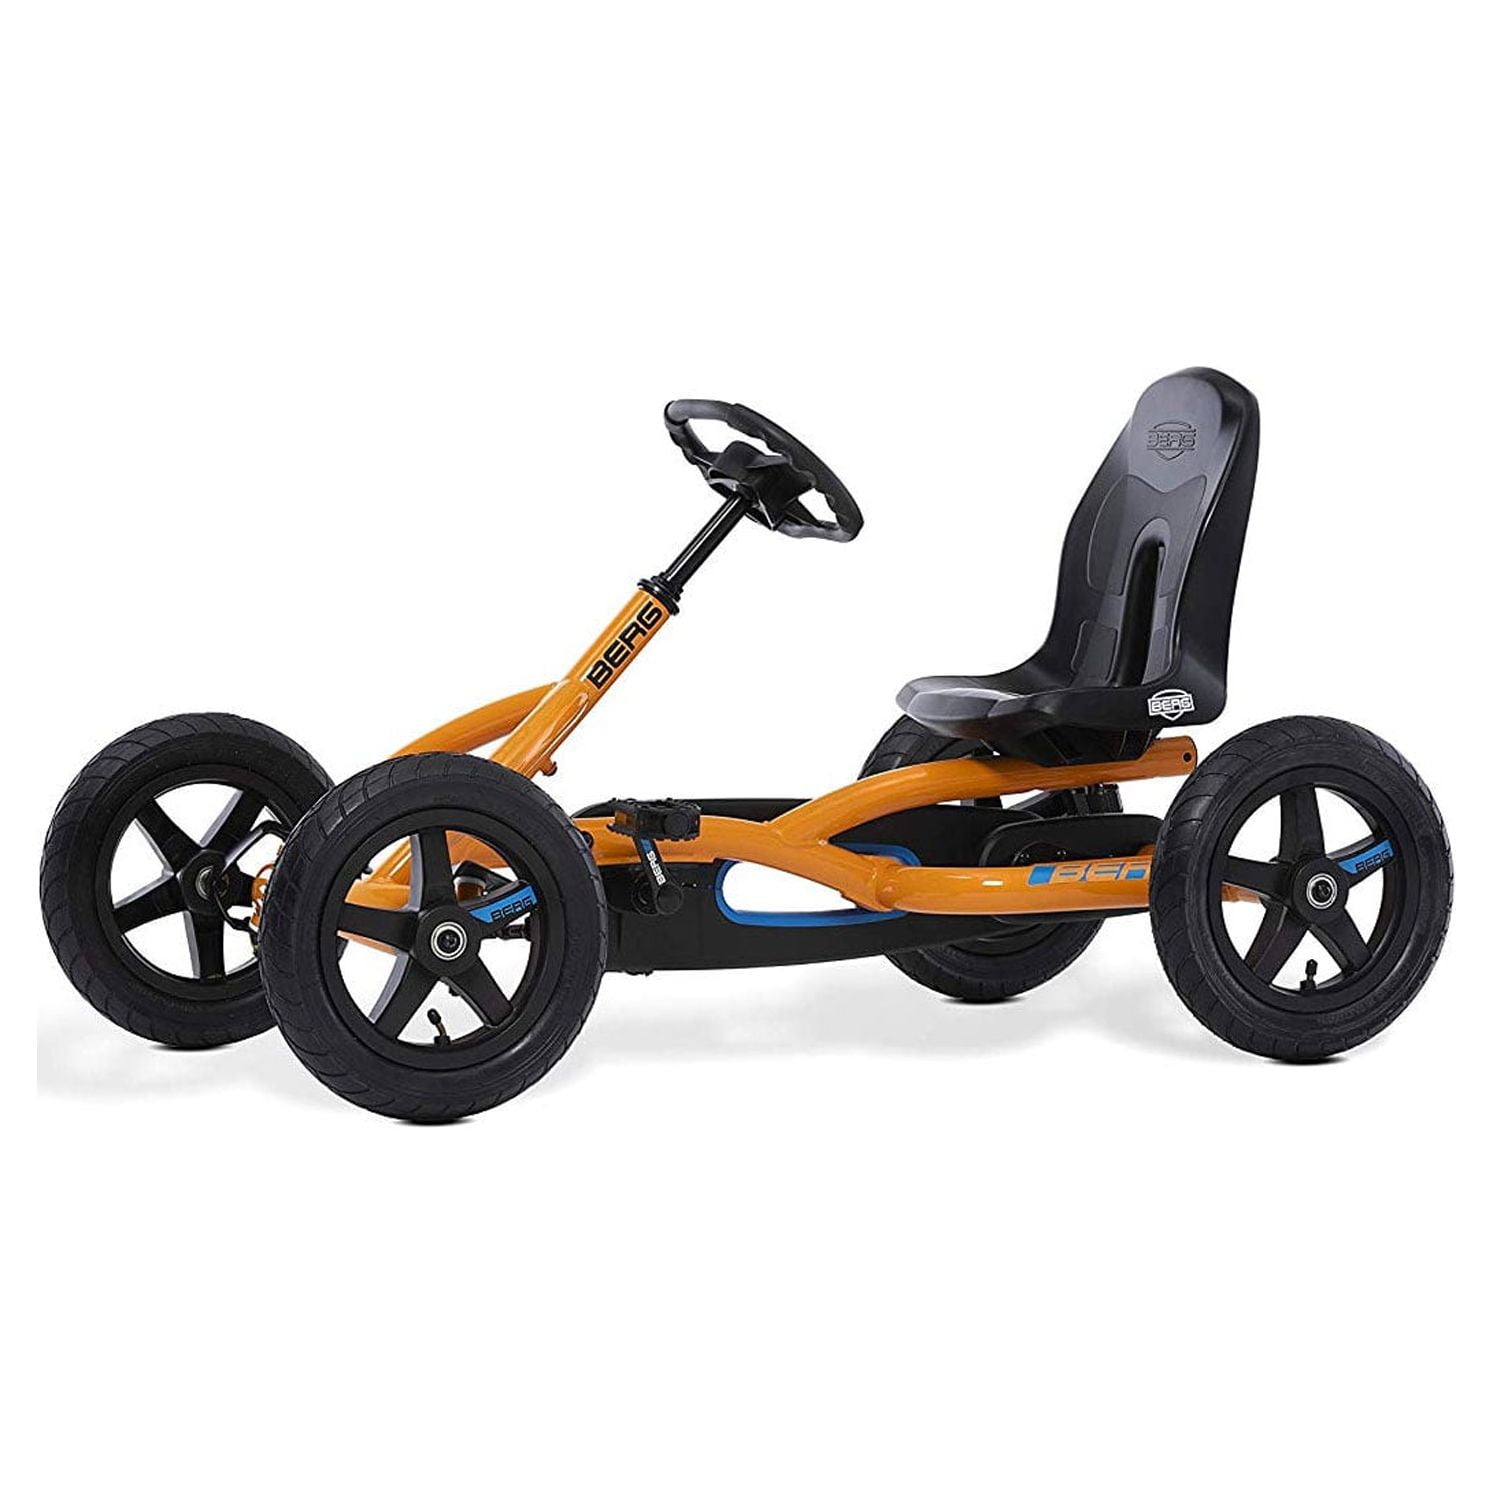 Air Jet Pedal Go Kart - Green - Kids, Sporty Graphics on The Front Fairing,  Adjustable Bucket Seat, 4 Spoke Rims w/ 10 EVA Wheels, Sporty Steering  Wheel, Kids Go Kart Ages 4+ 